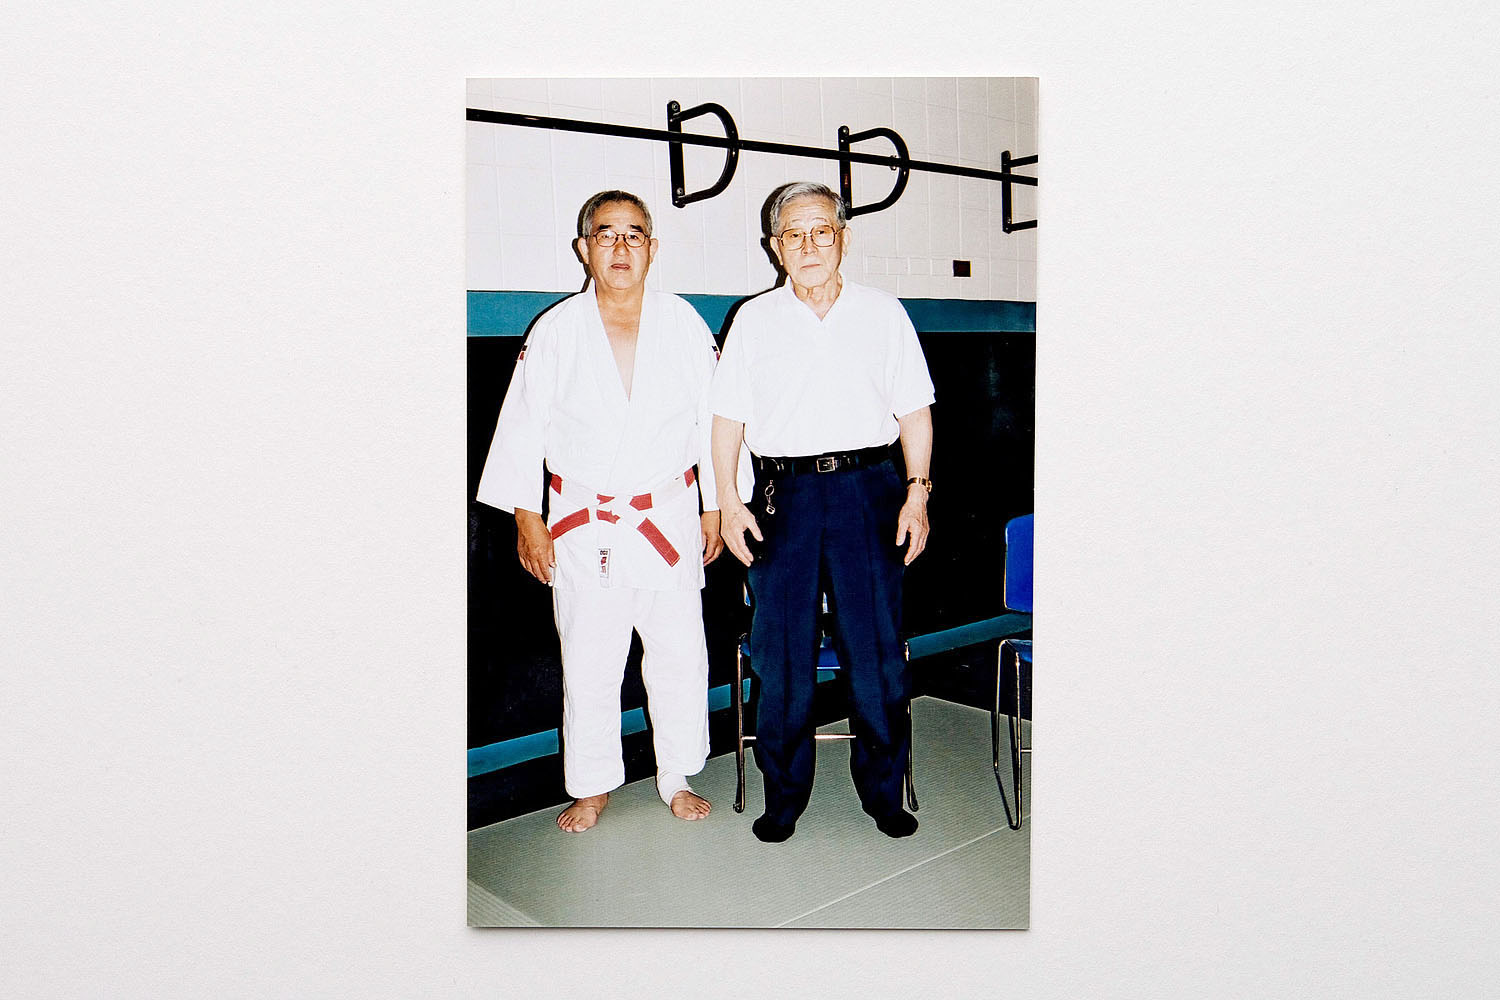  Akinori Hosaka and Ichiro Abe at Kodokan Kata Clinic hosted by Yoshisada Yonezuka, New York, USA. 